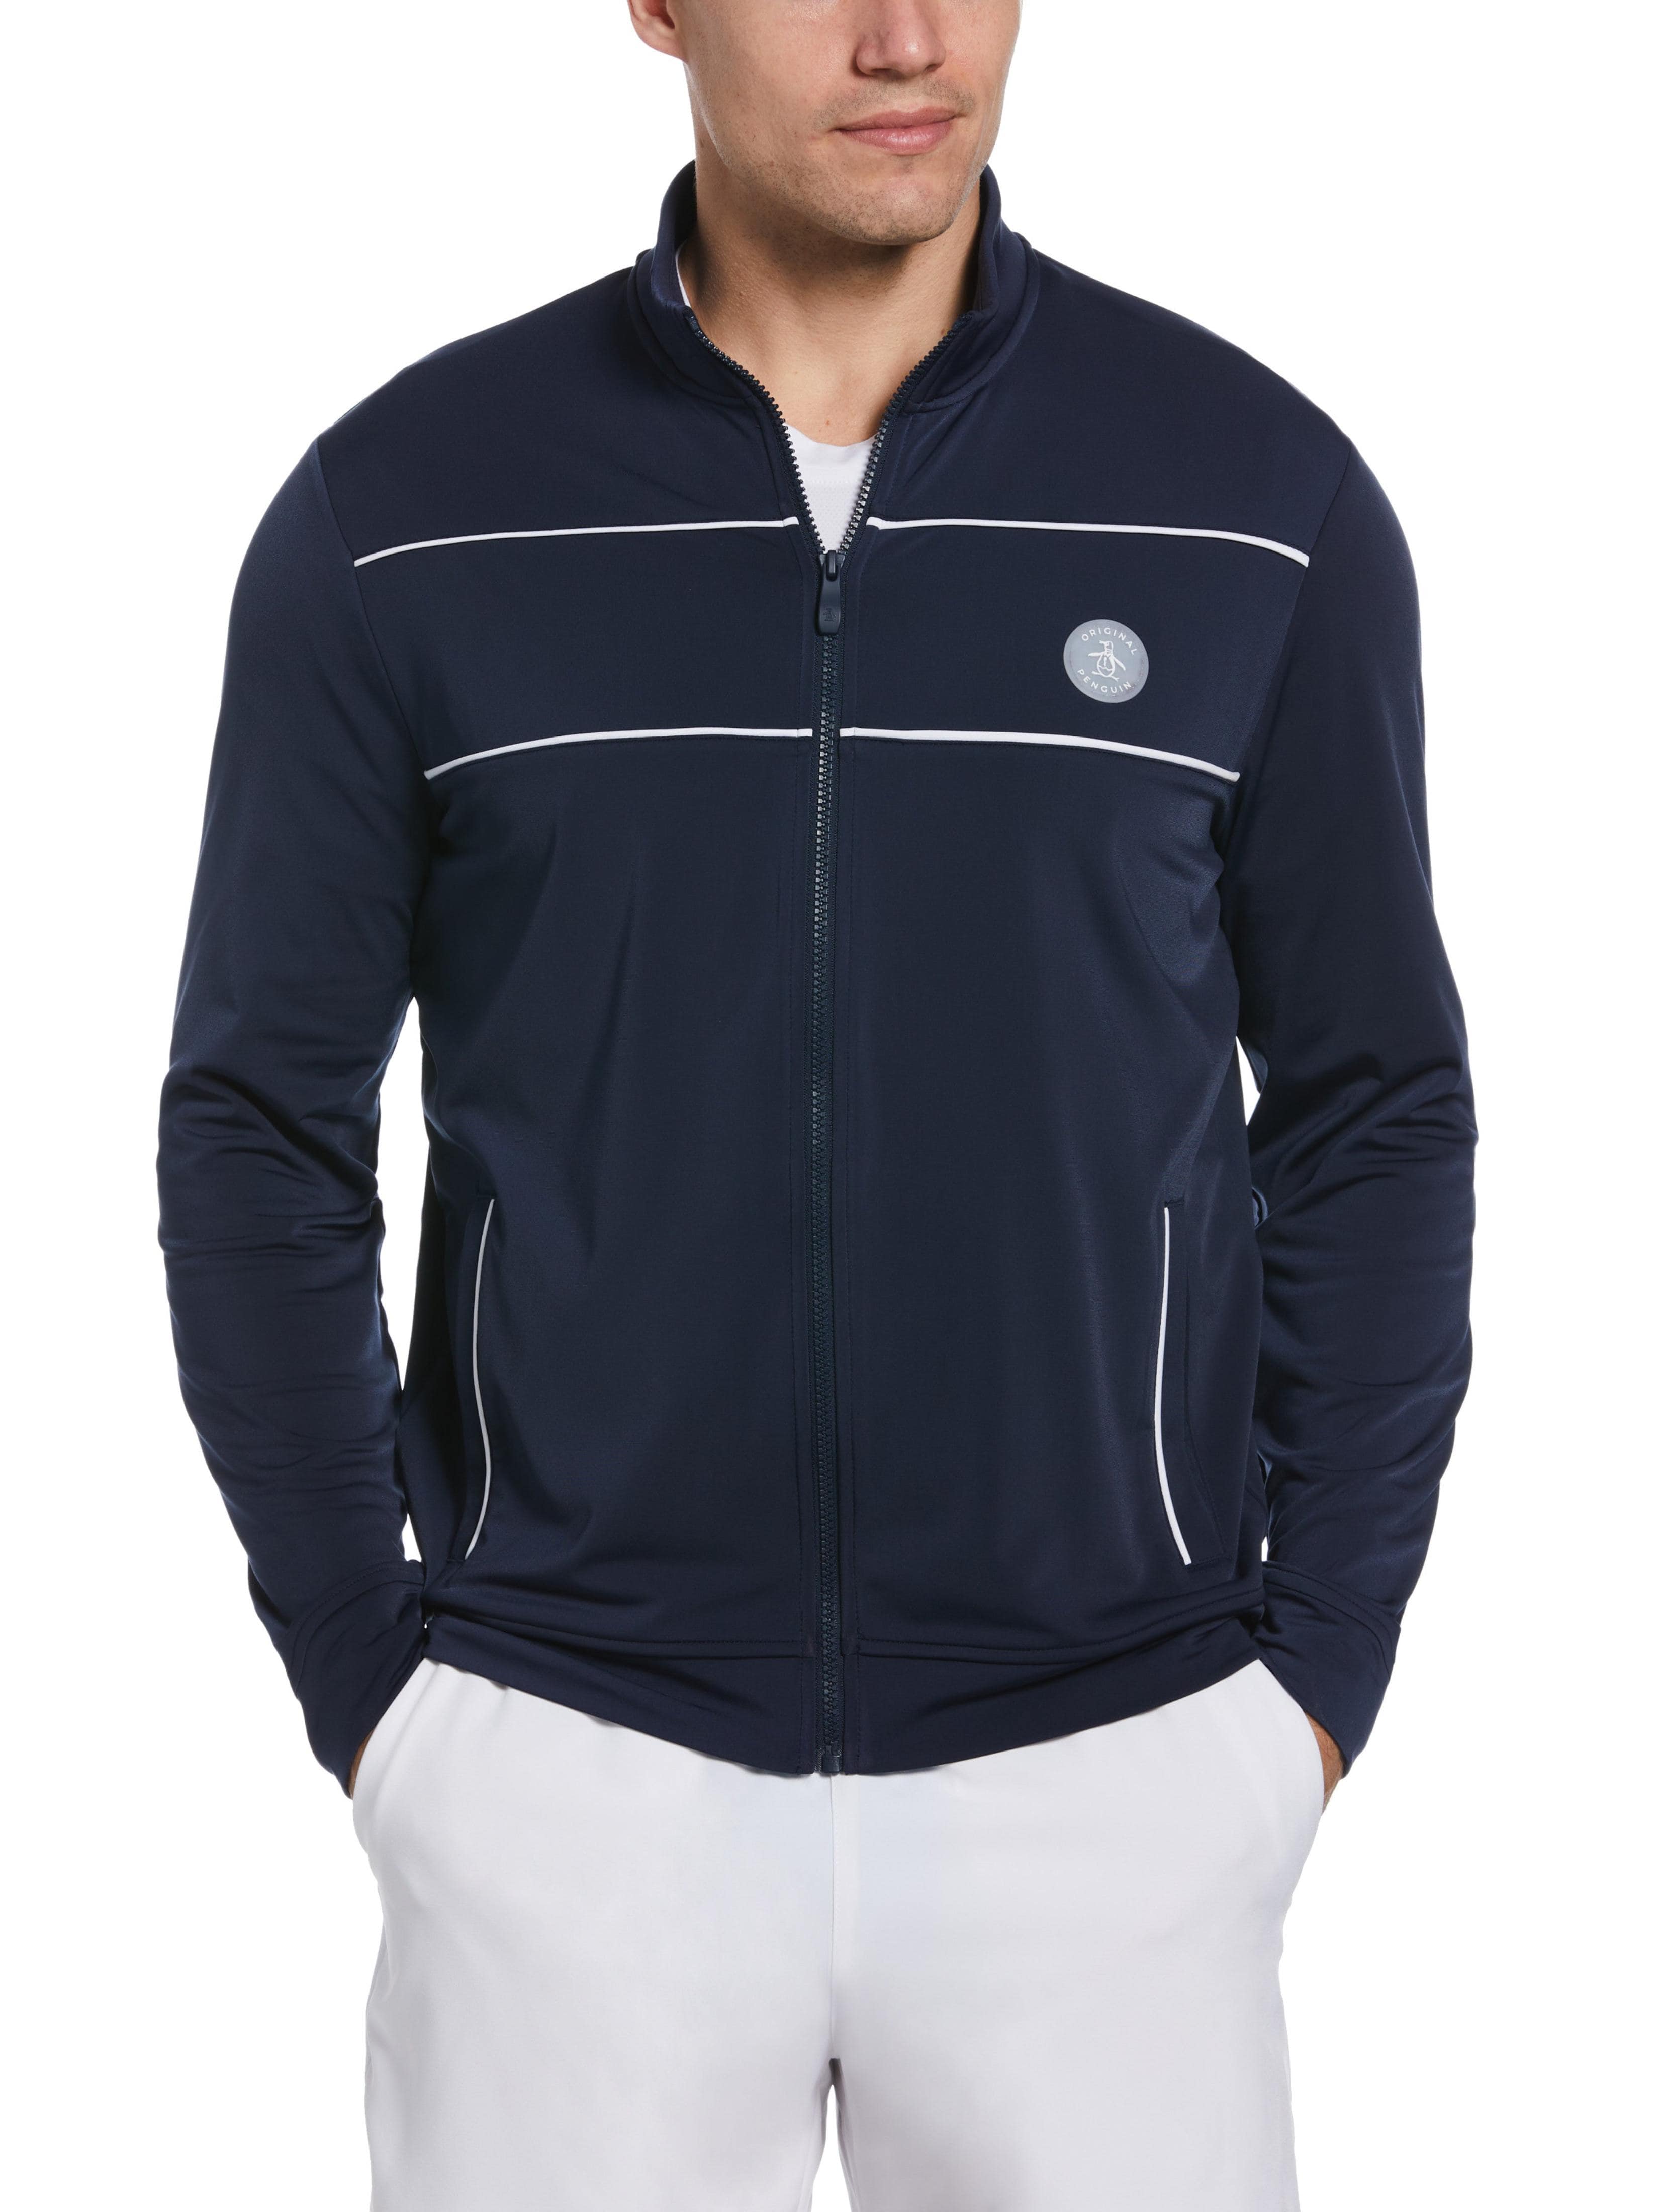 Original Penguin Mens Essential Tennis Track Jacket Top, Size Small, Dark Navy Blue, Polyester/Elastane | Golf Apparel Shop